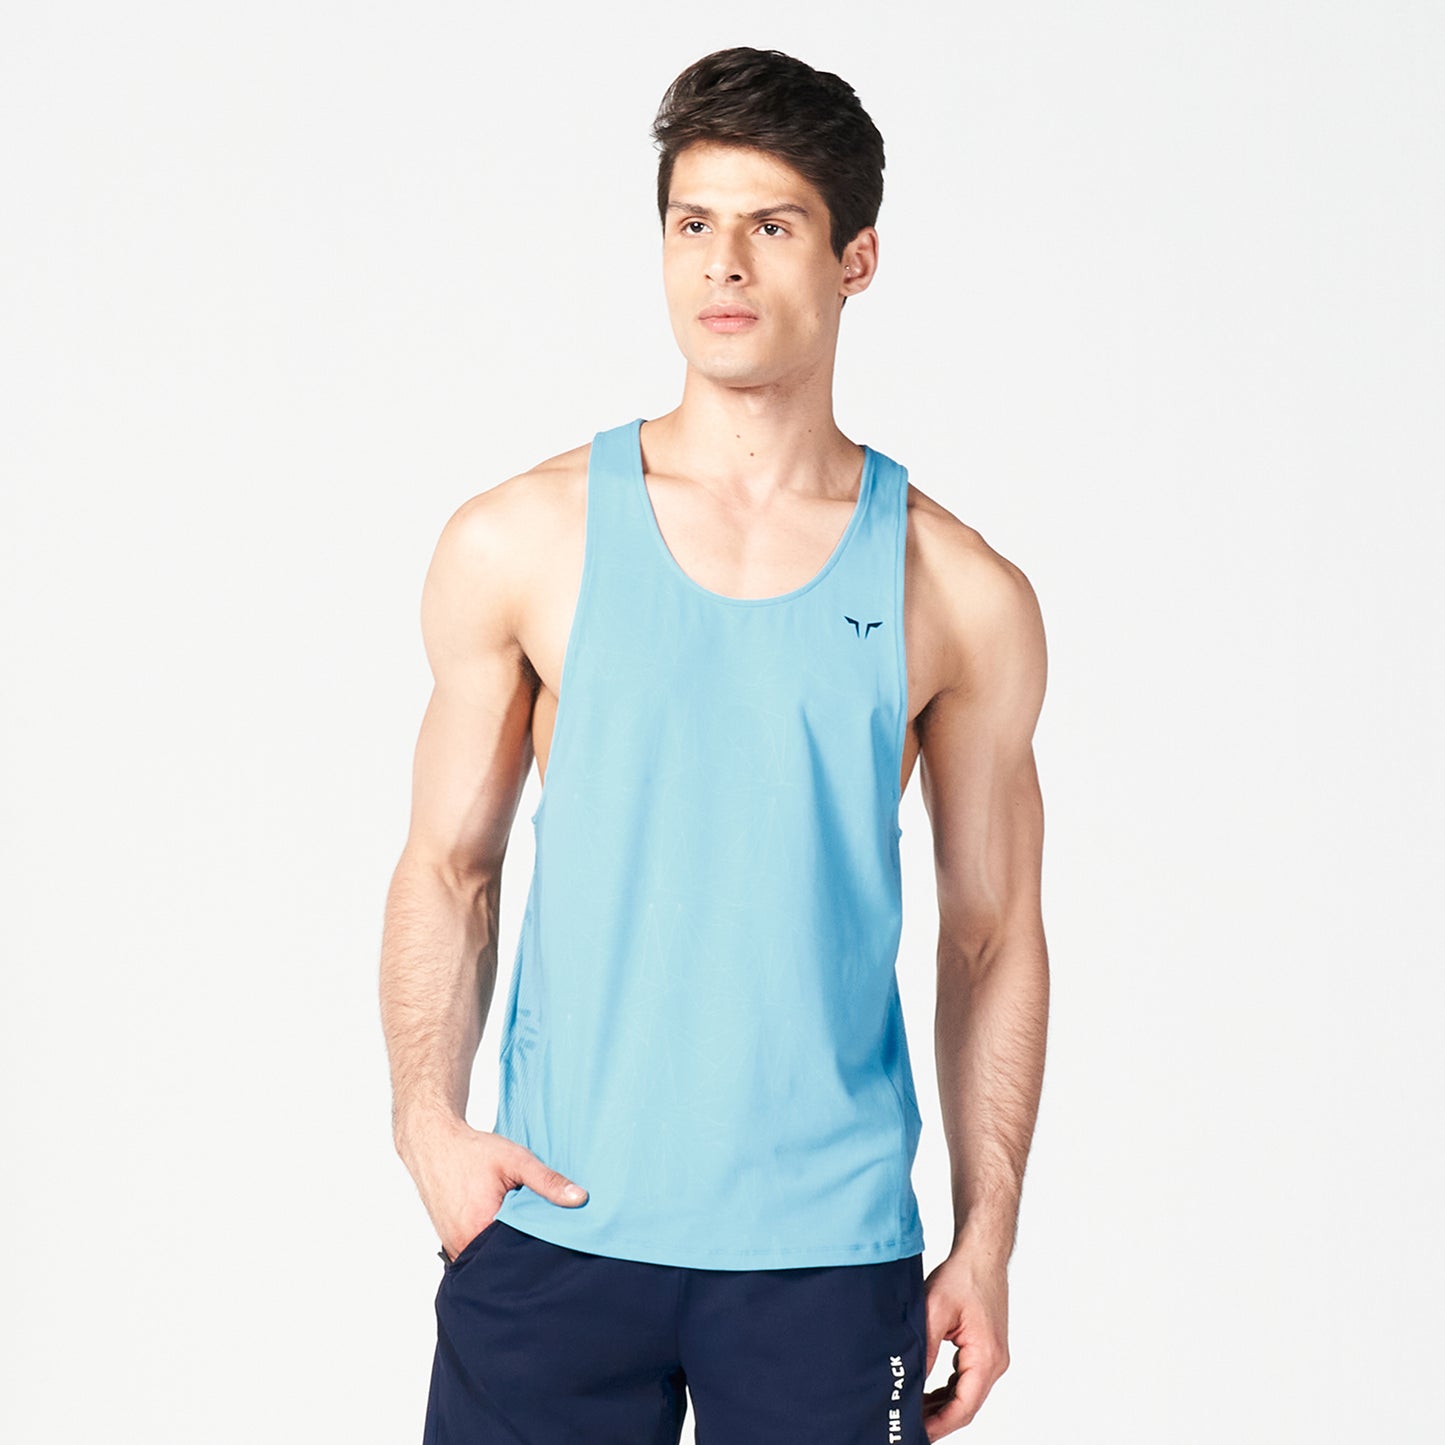 squatwolf-gym-wear-core-aerotech-tank-blue-stringer-vests-for-men